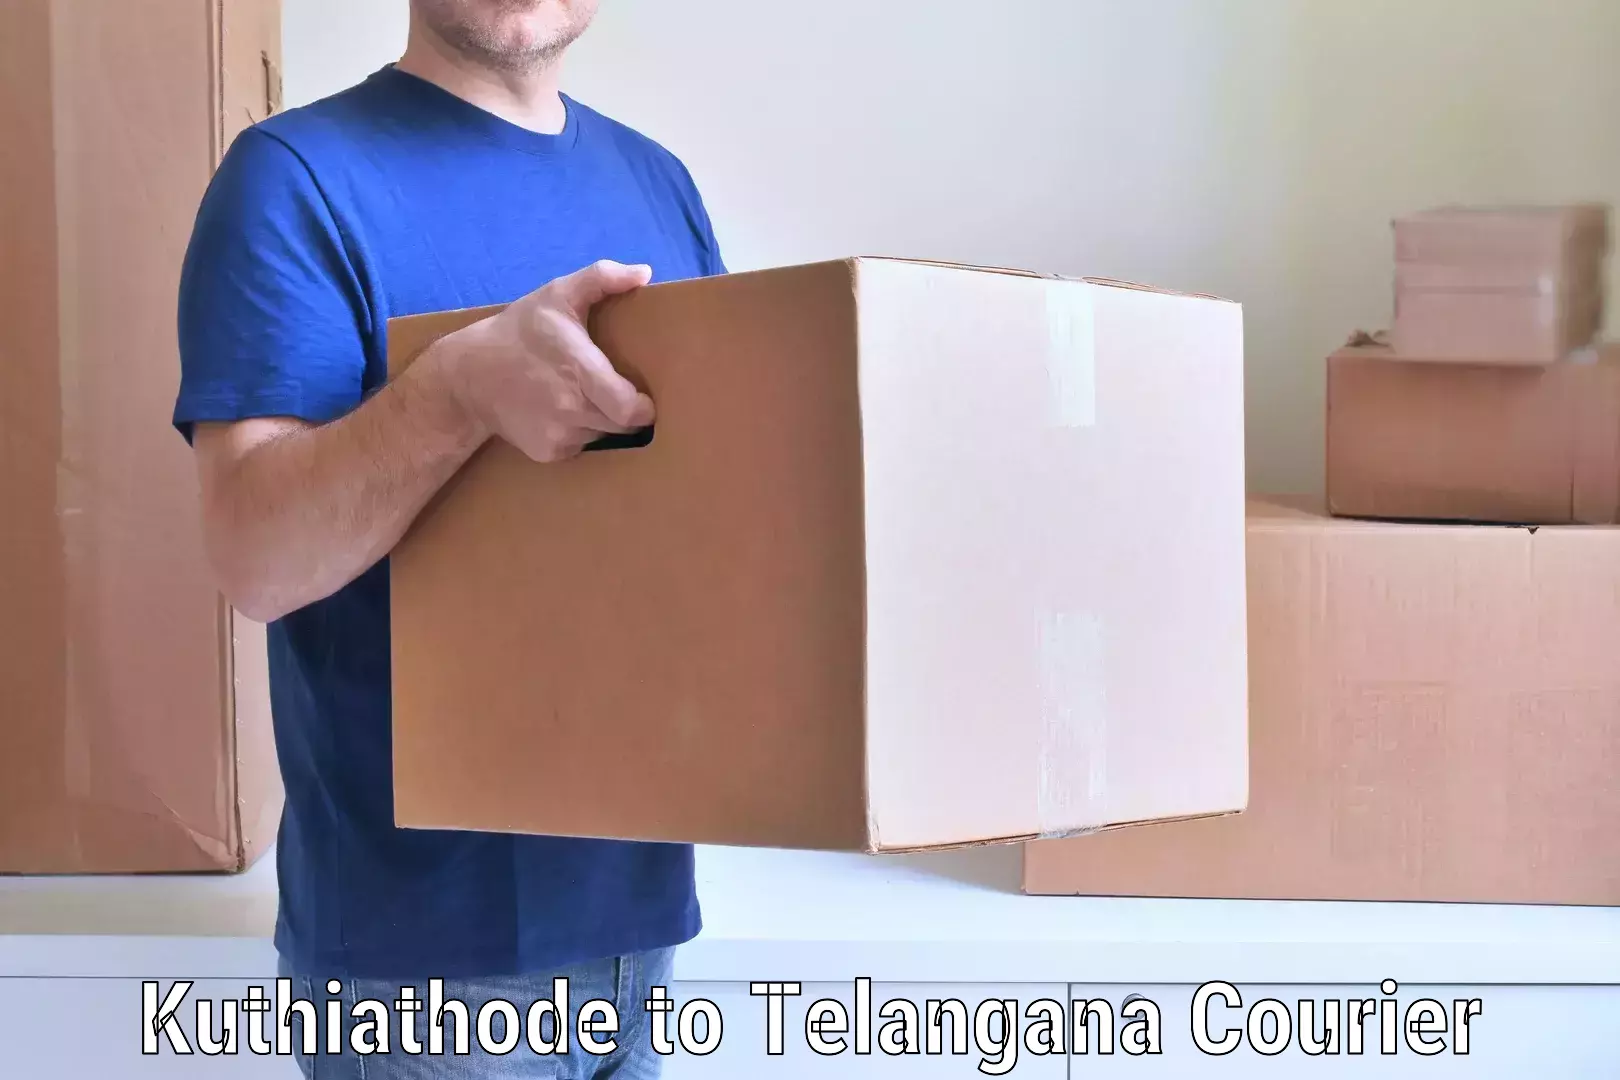 Efficient moving company Kuthiathode to Gangadhara